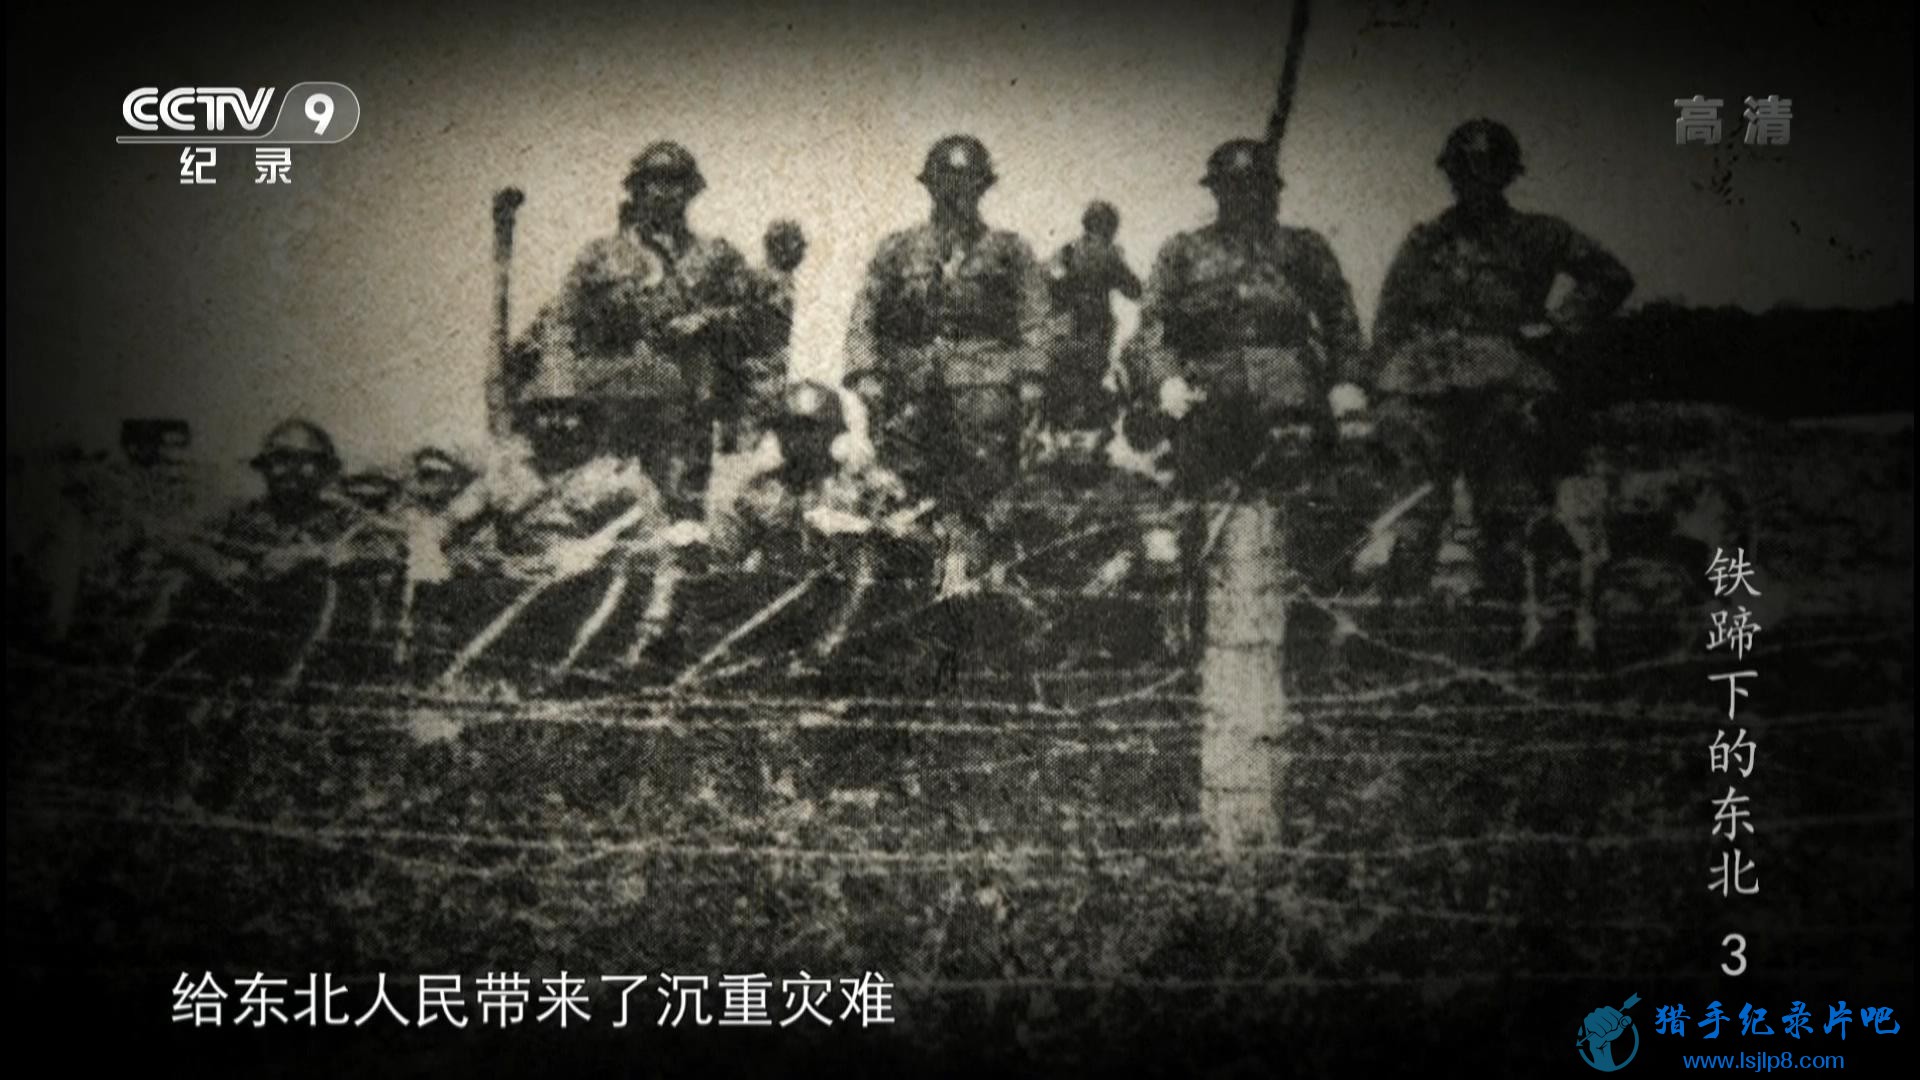 CCTV9 µĶ Northeast China under the Ravage of Japanese Aggressor (2015).jpg